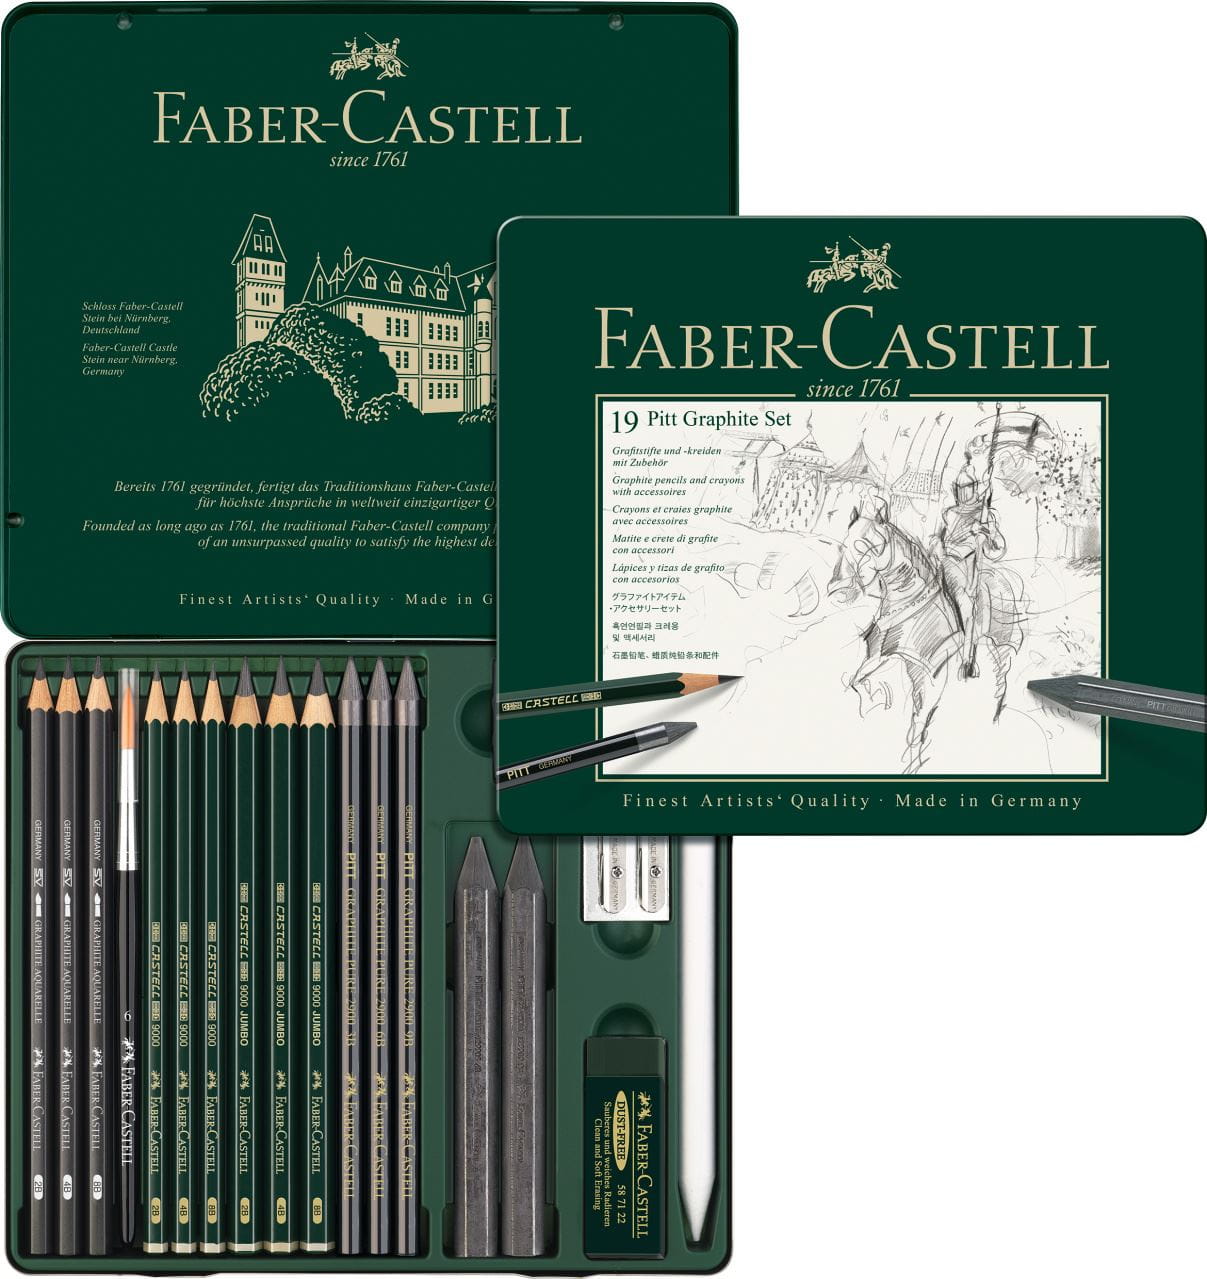 Faber-Castell - Σετ Pitt Graphite σε μεταλλική κασετίνα μεσαίο